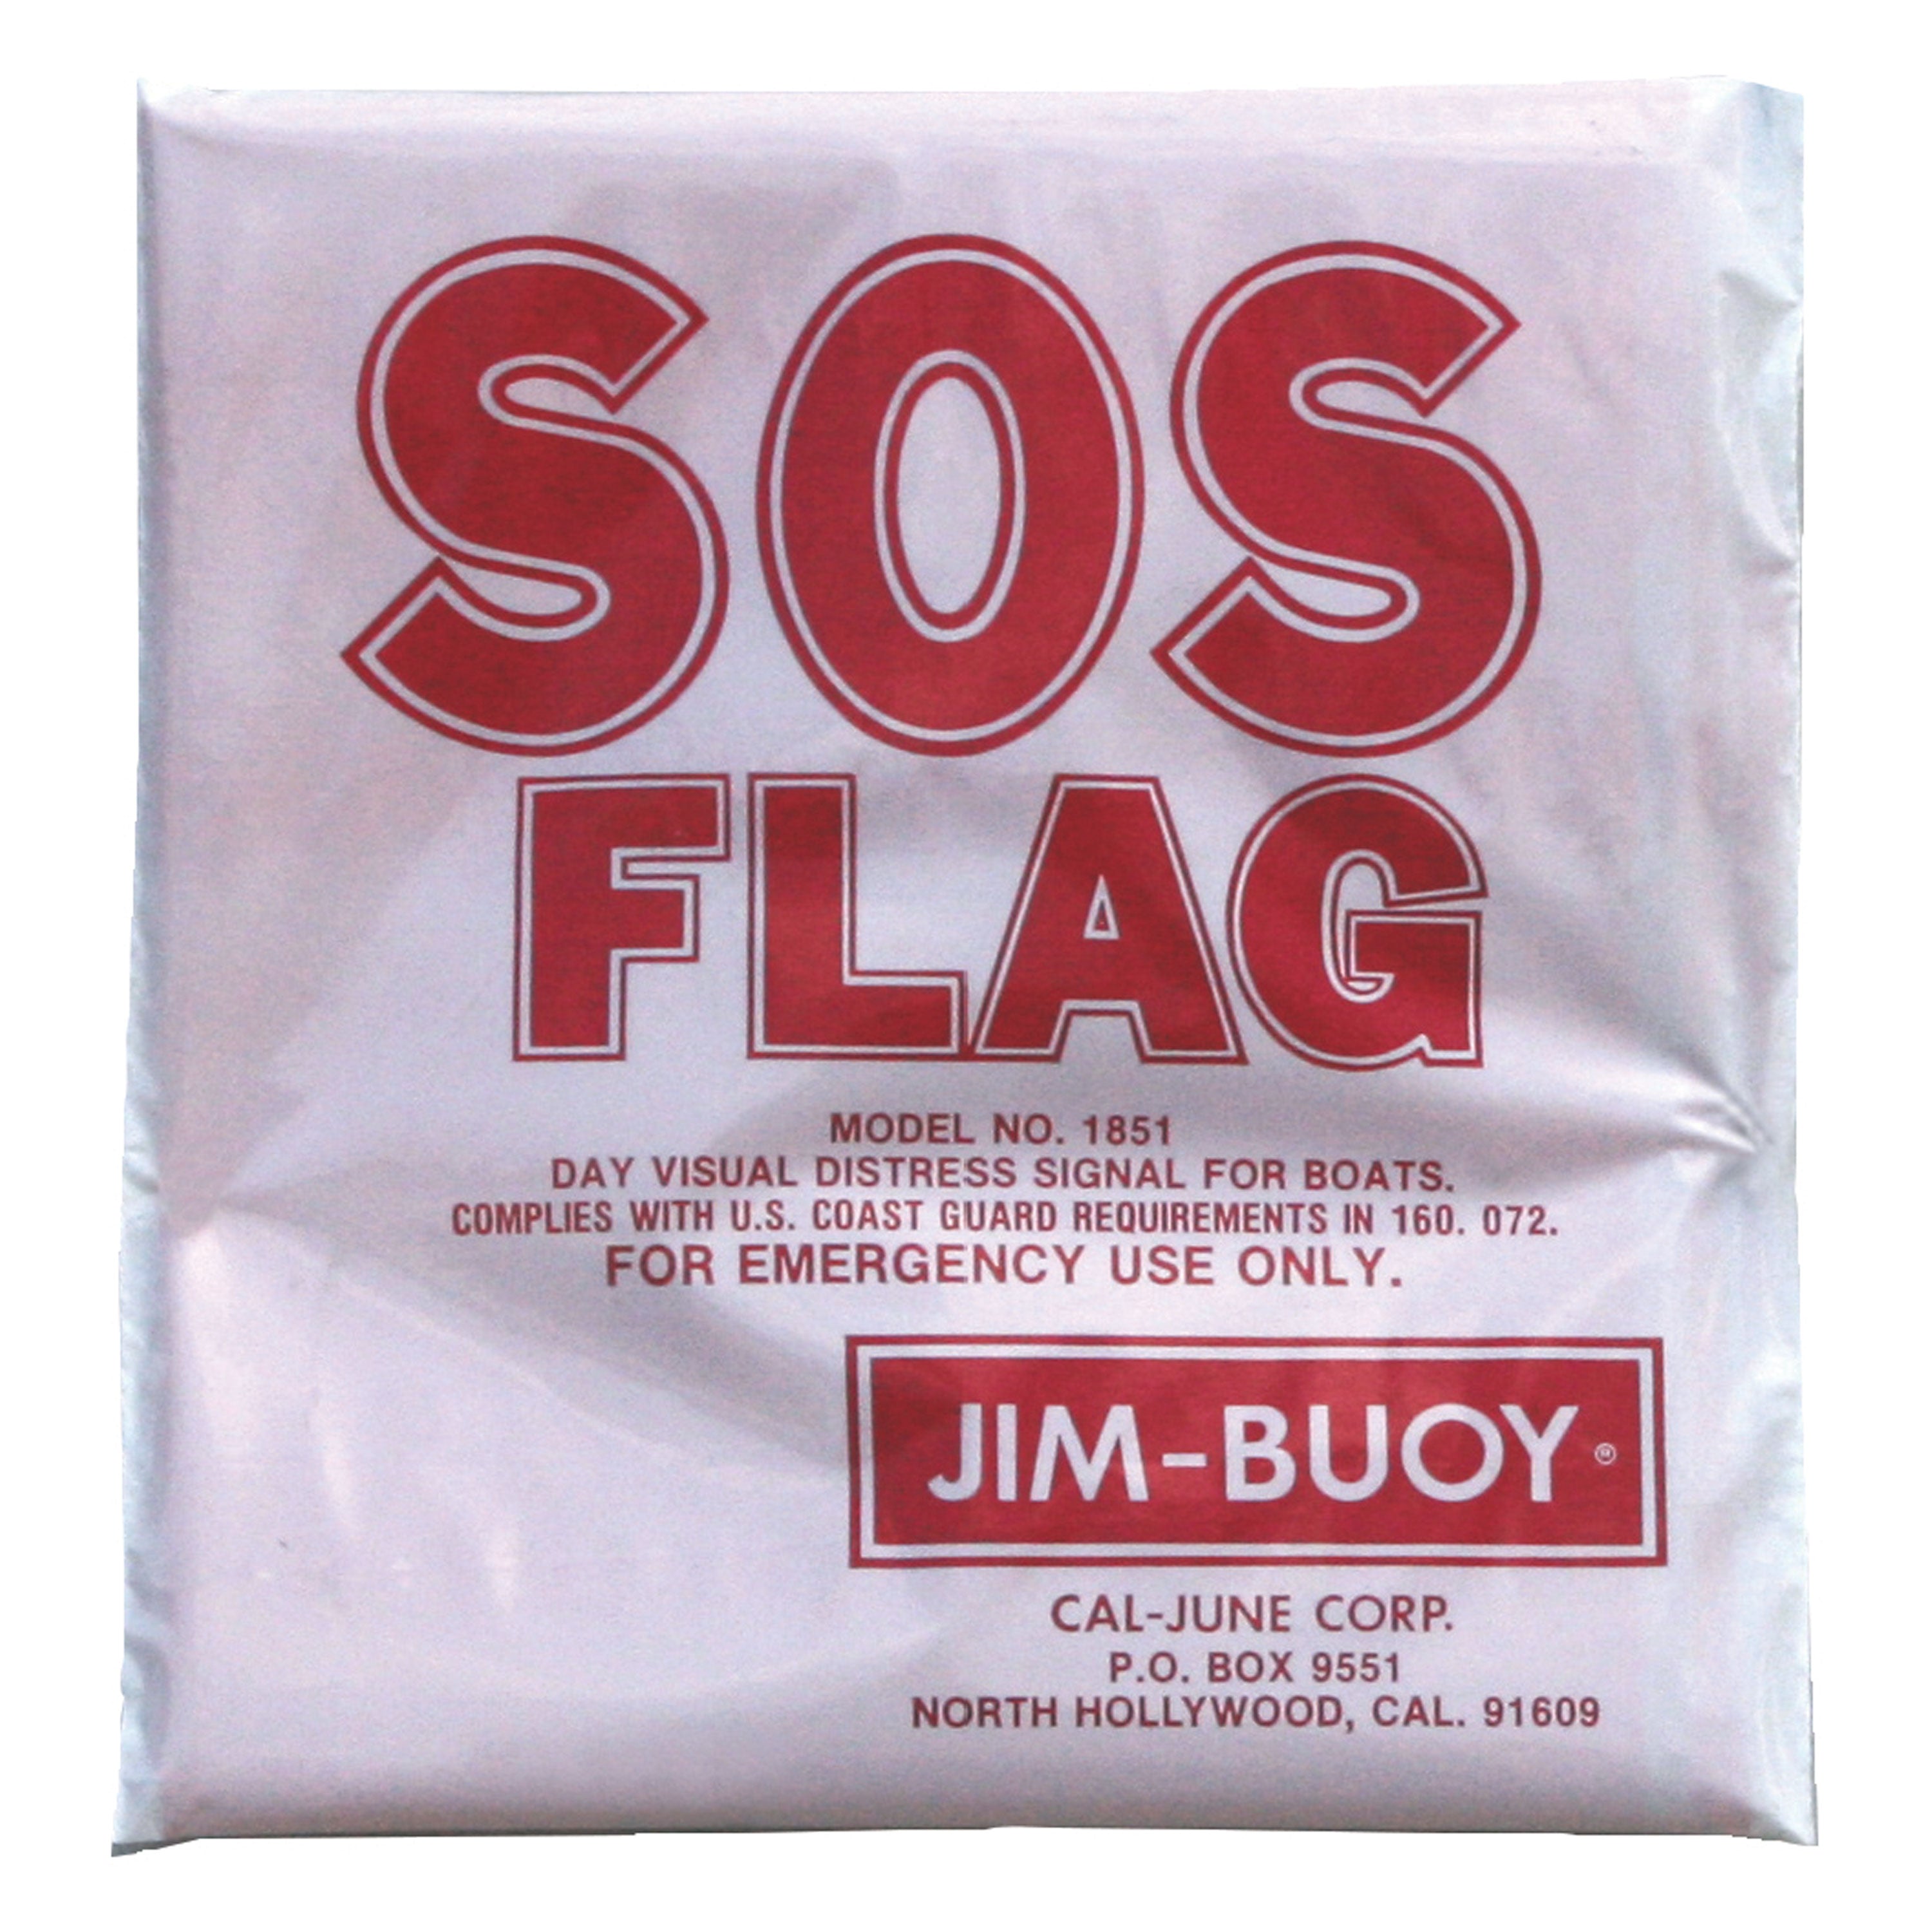 Jim-Buoy 1851 S.O.S. Flag